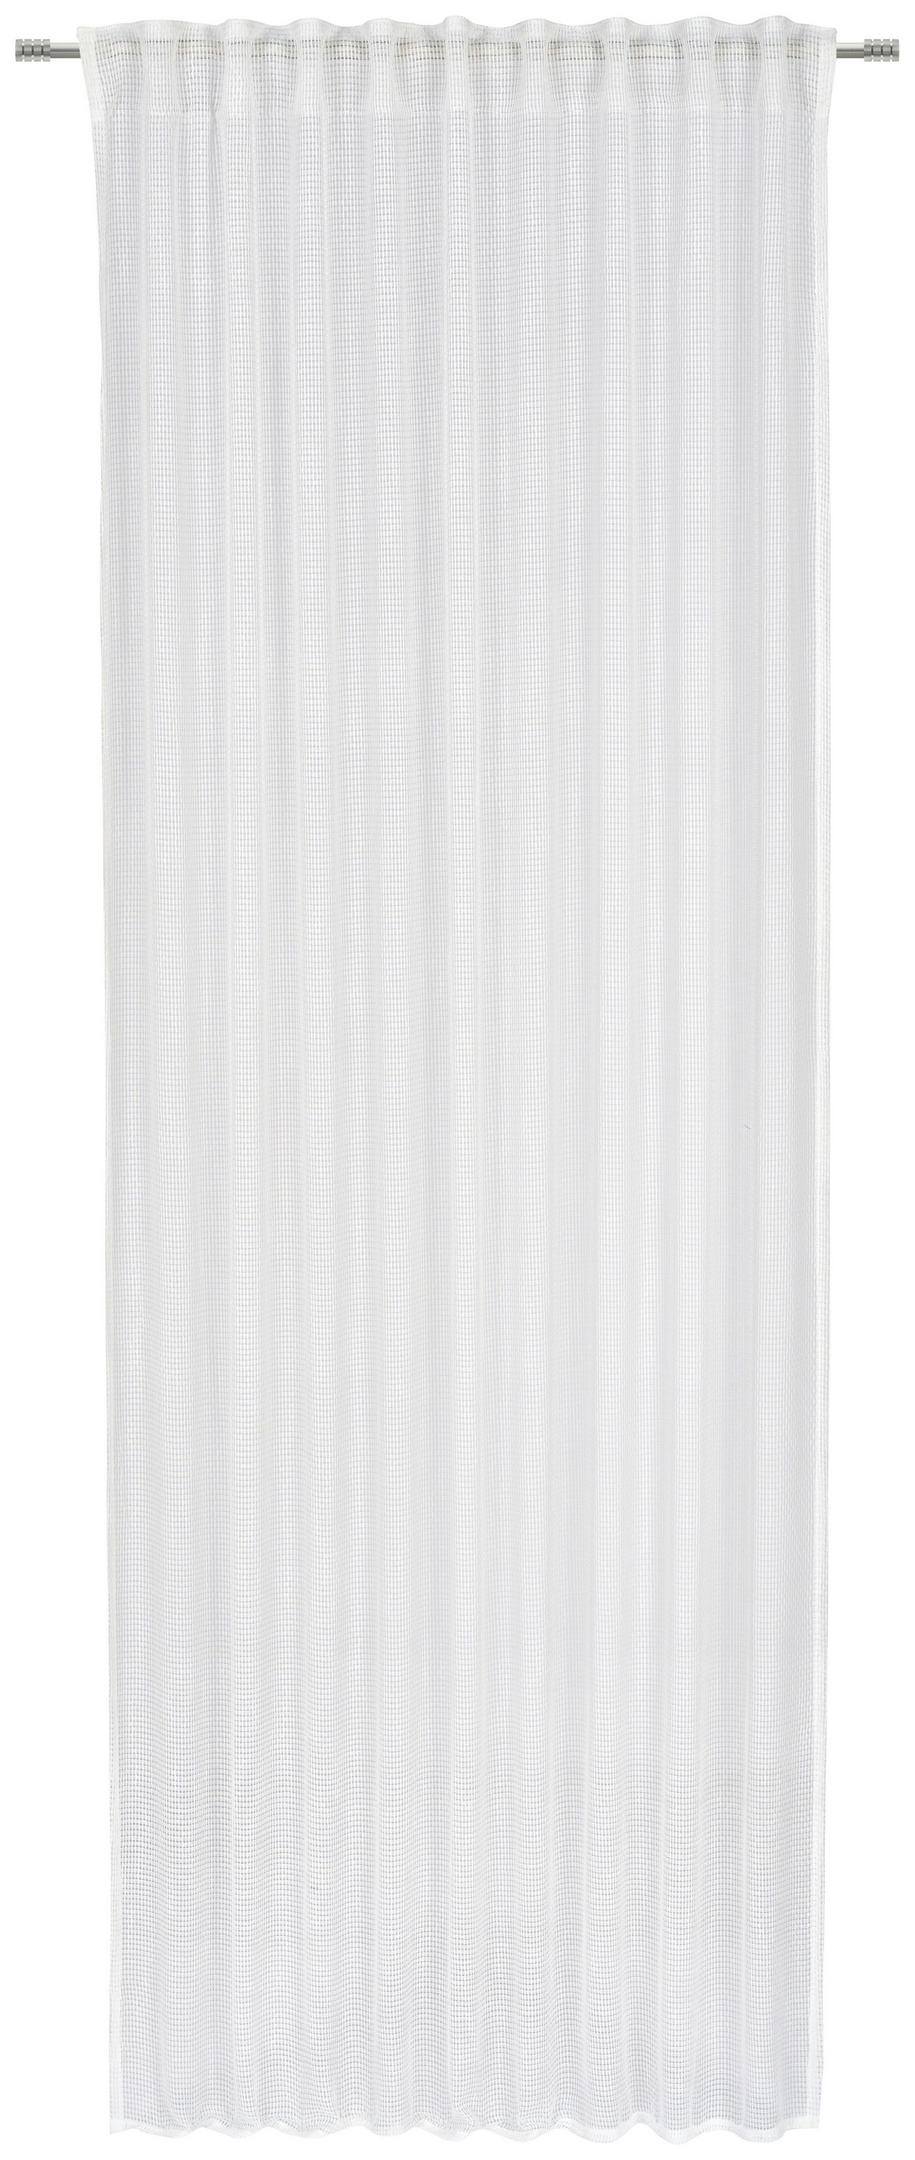 FERTIGVORHANG halbtransparent 135/245 cm   - Creme, Design, Textil (135/245cm) - Esposa